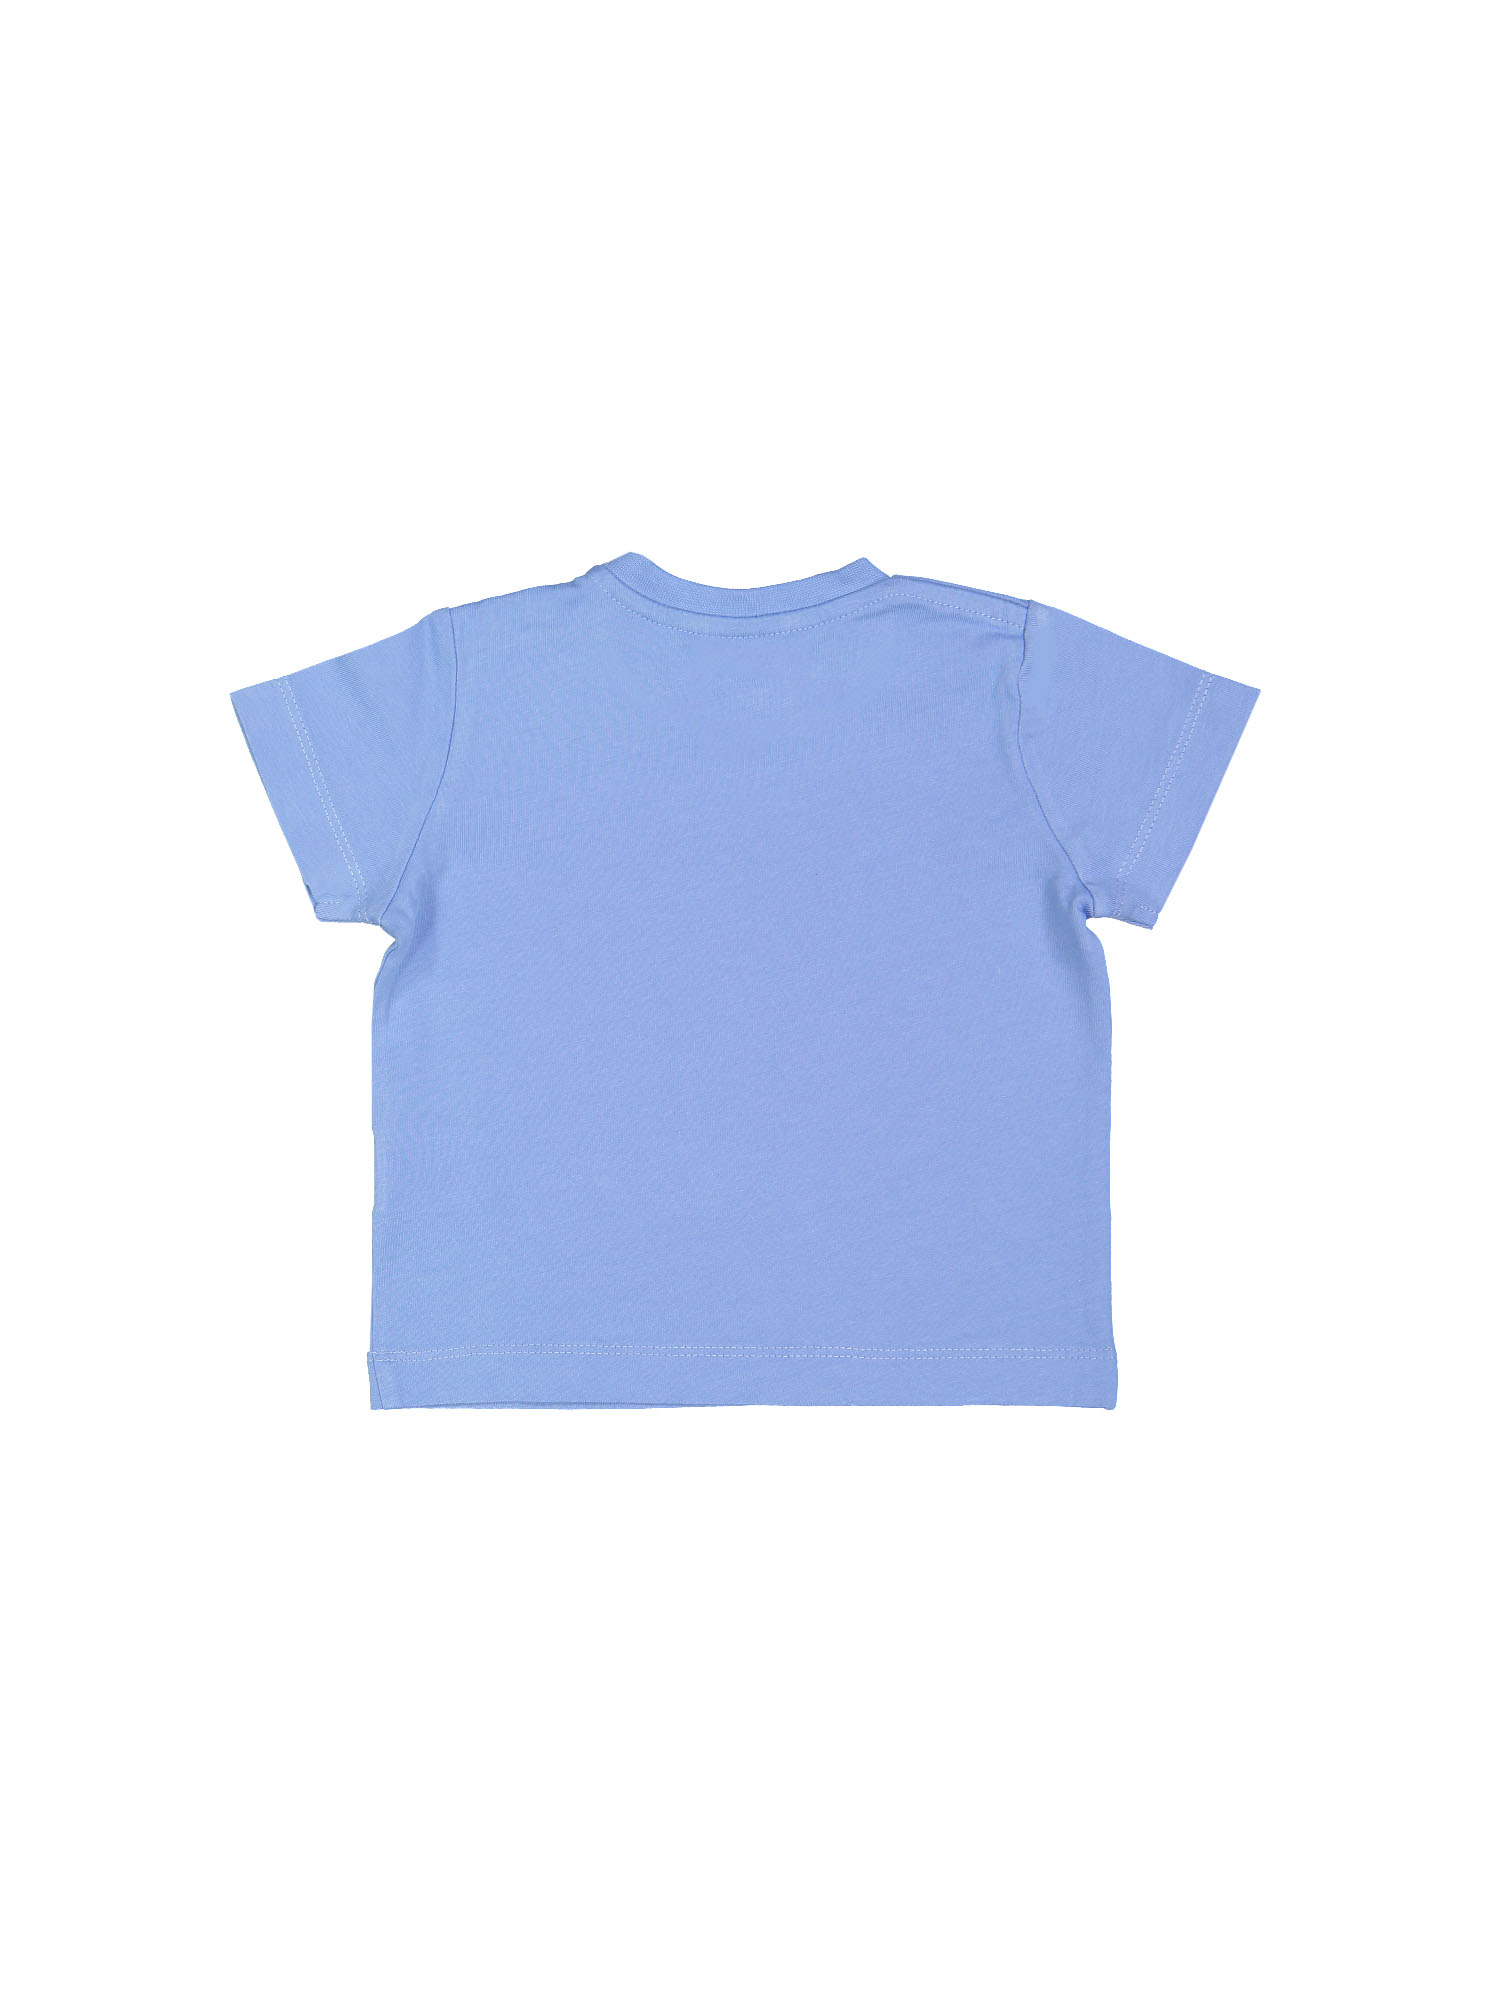 t-shirt mini time traveller blauw 06m